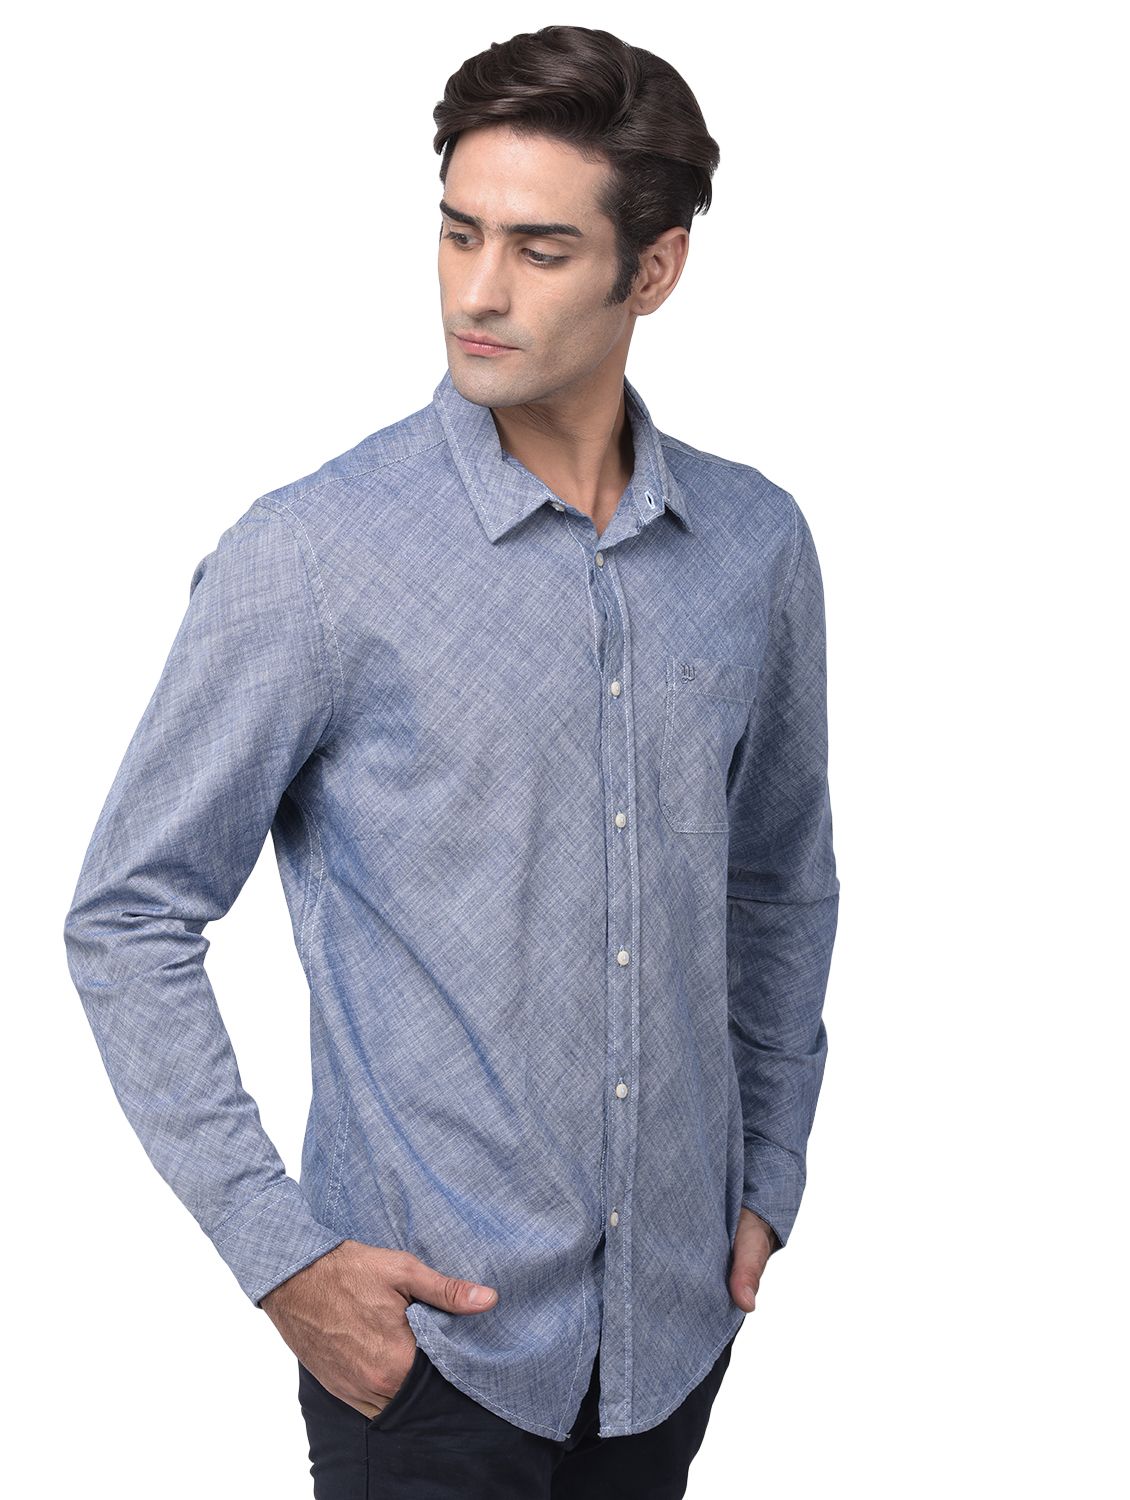 Denim blue long sleeves shirt